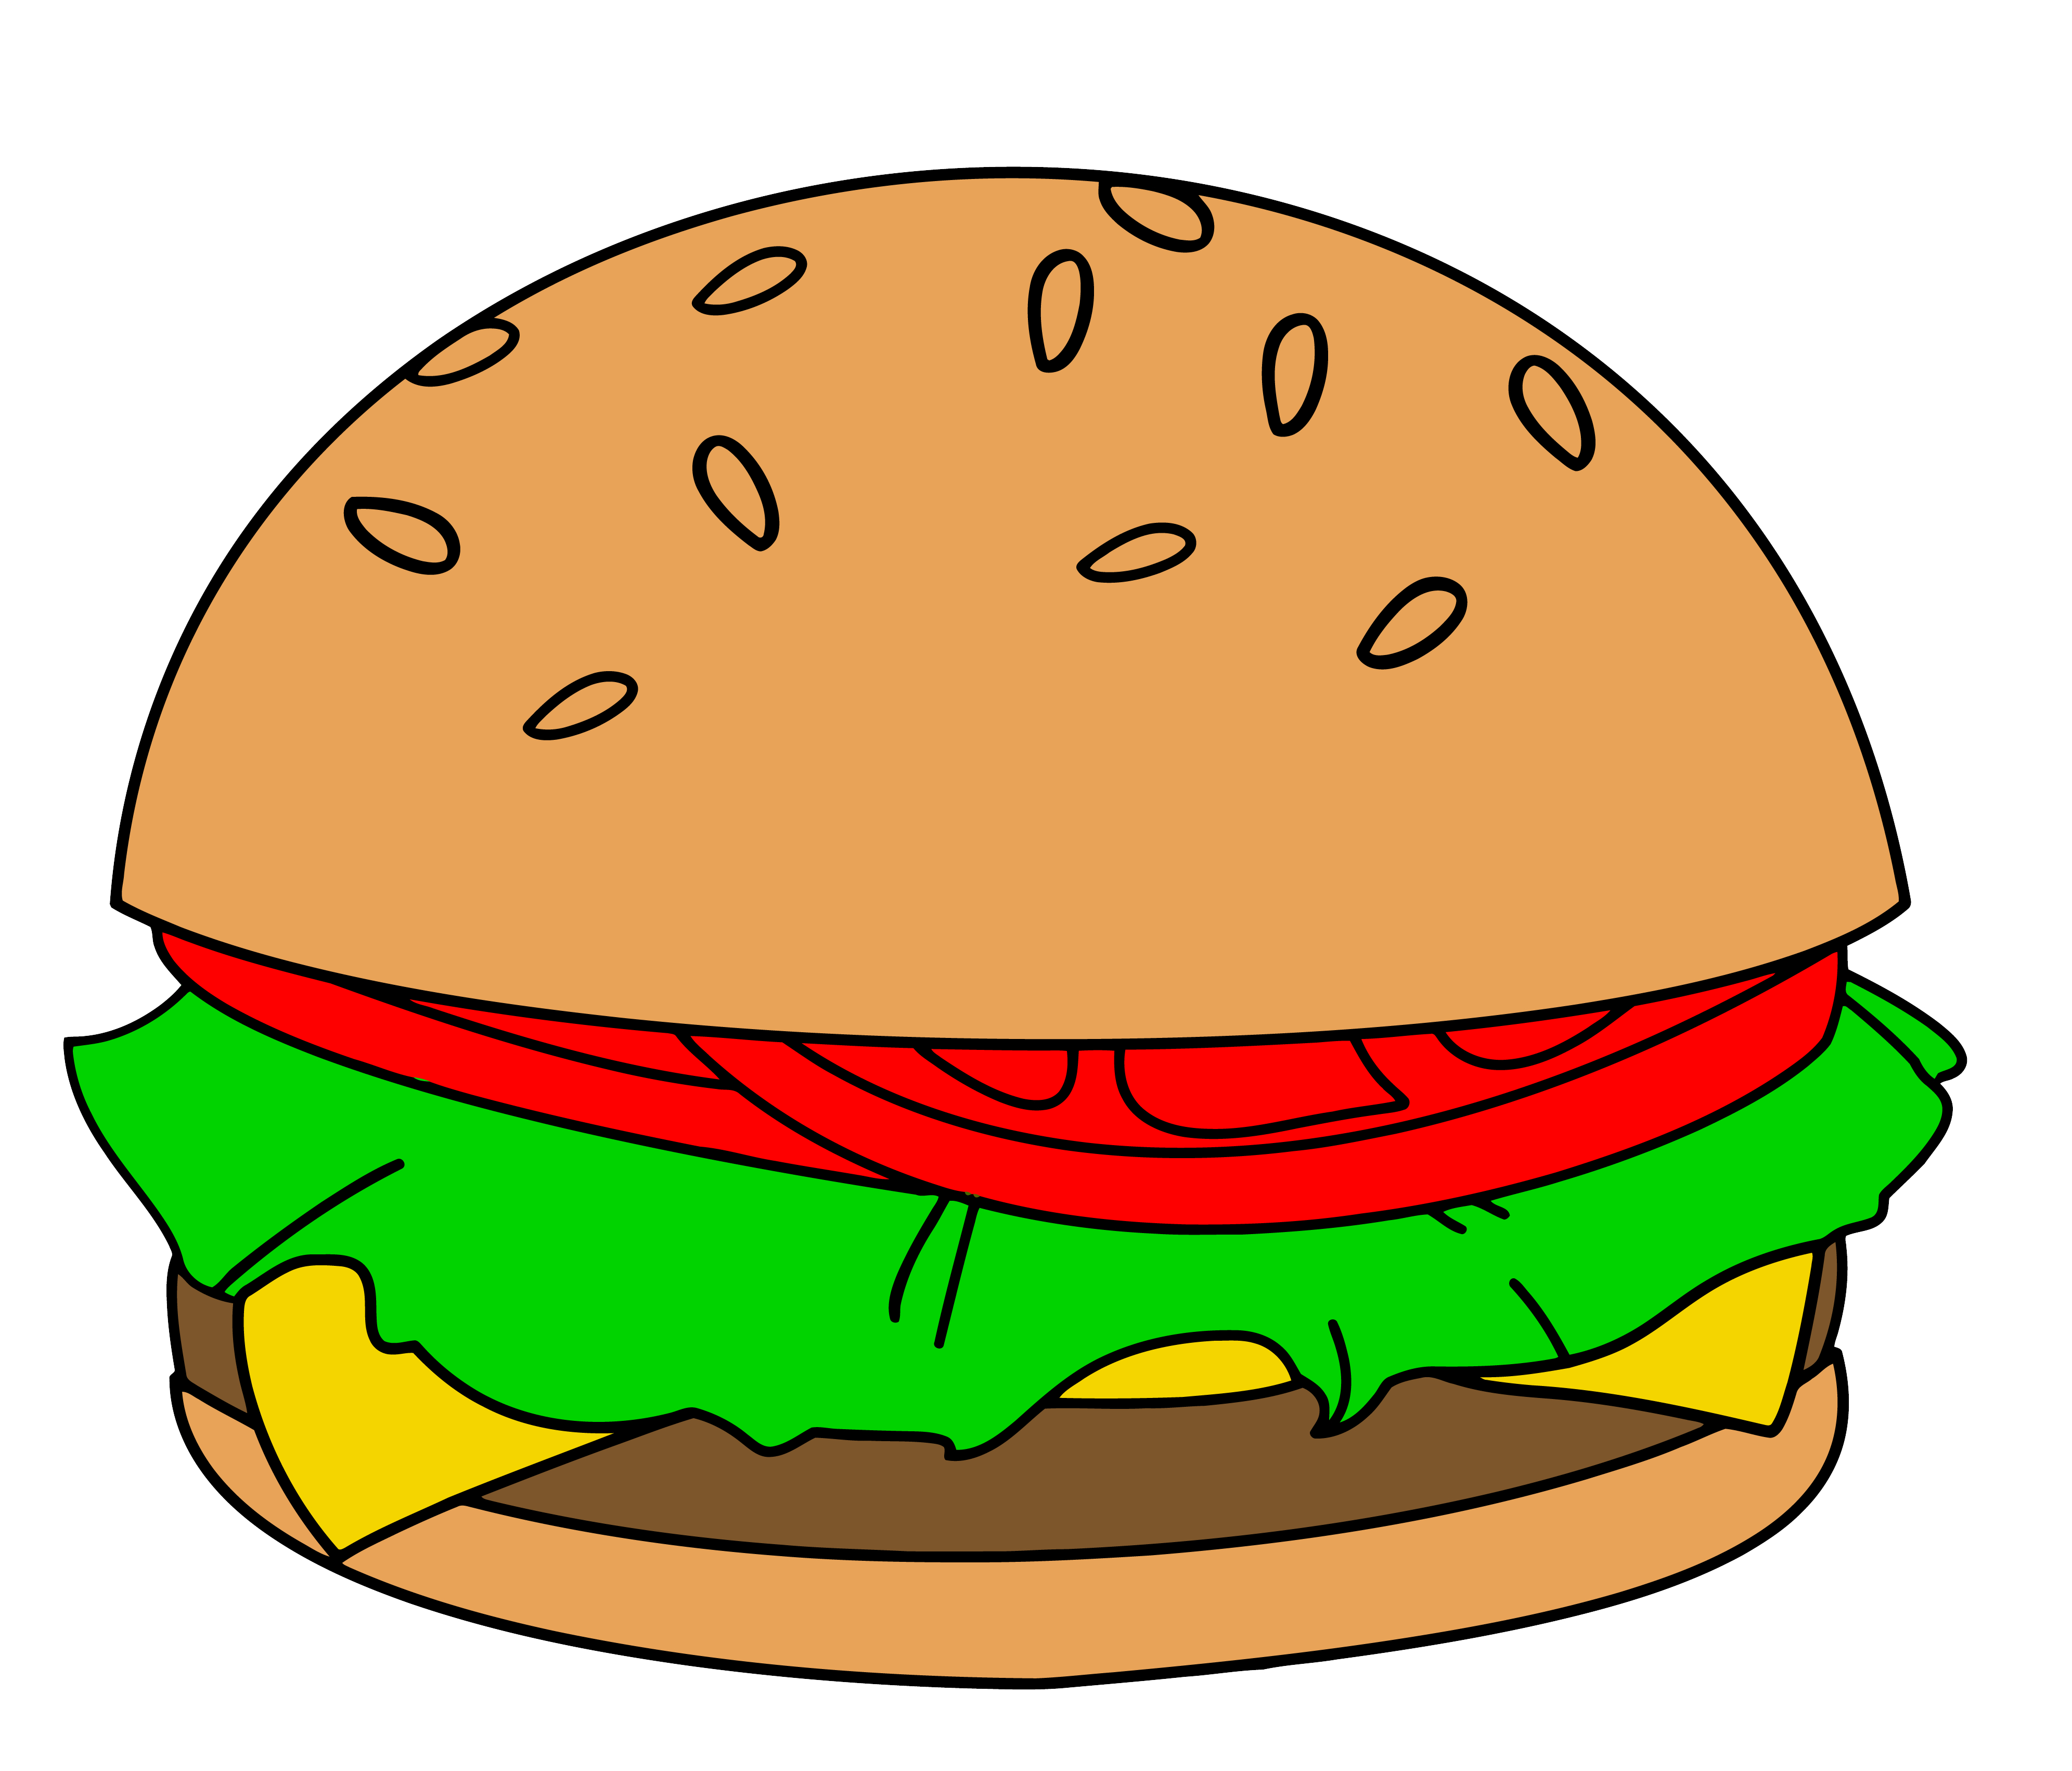 Hamburger burger clipart free clipart image 3 - Cliparting.com